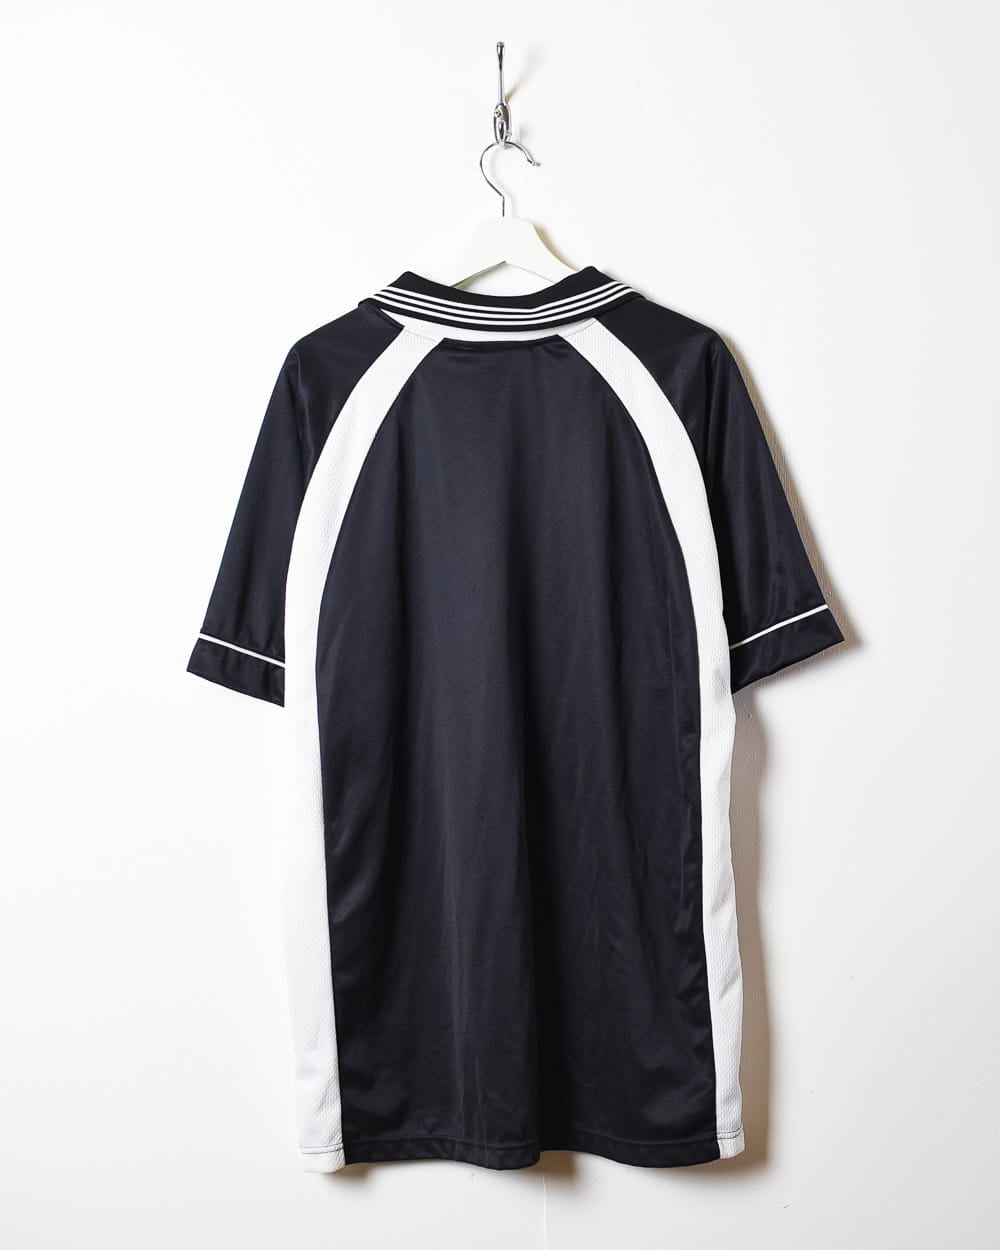 Black Adidas Collared T-Shirt - X-Large